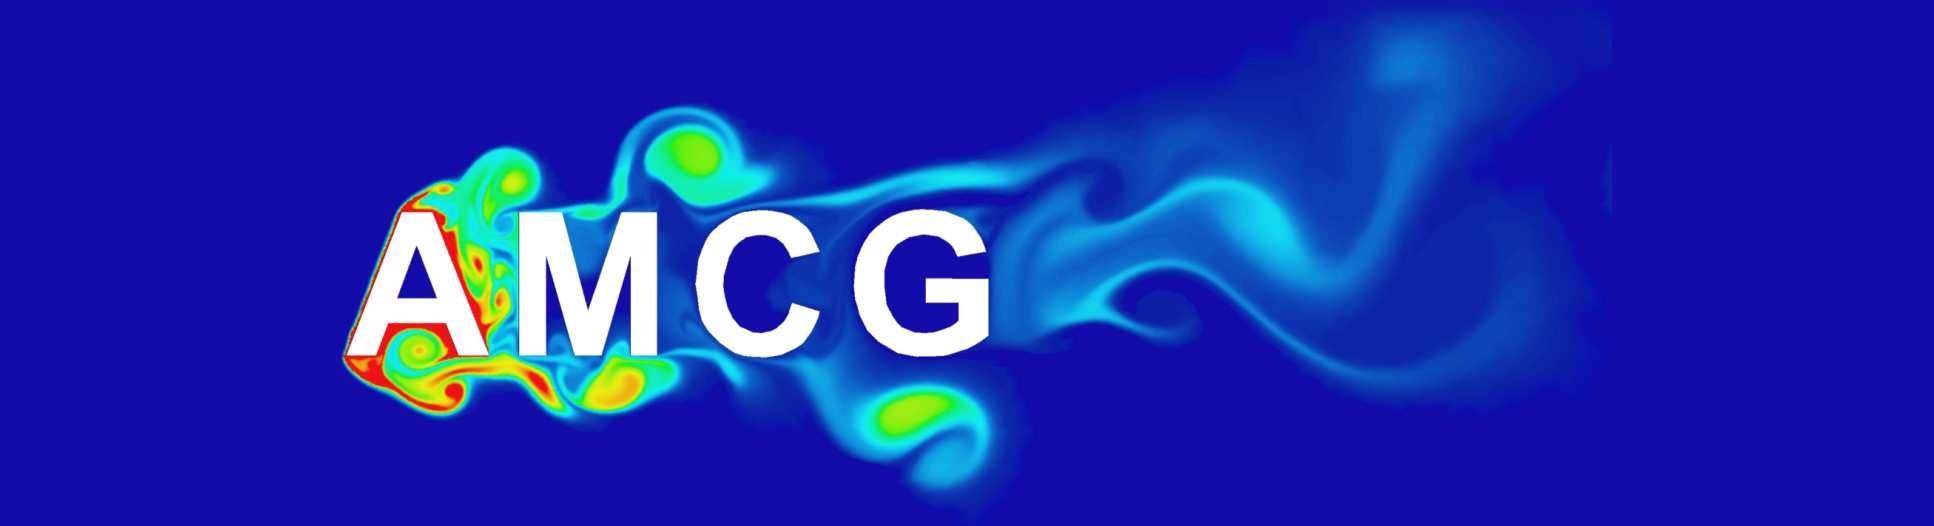 amcg logo